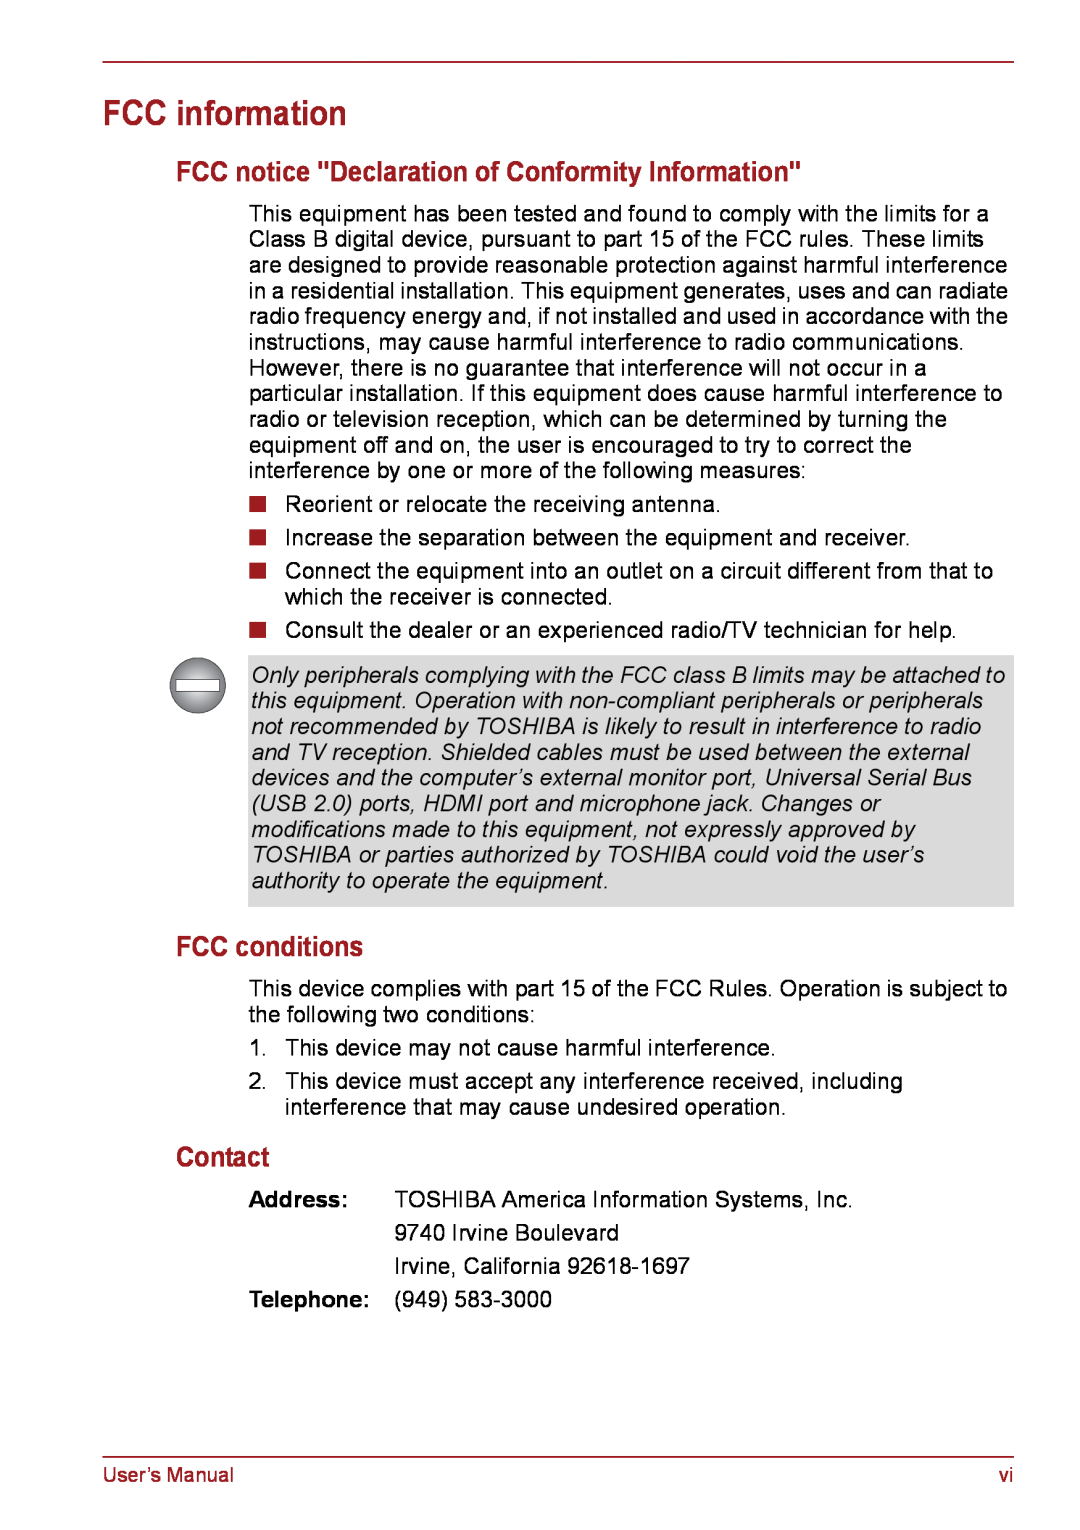 Toshiba PSC08U-02D01D FCC information, FCC notice Declaration of Conformity Information, FCC conditions, Contact 